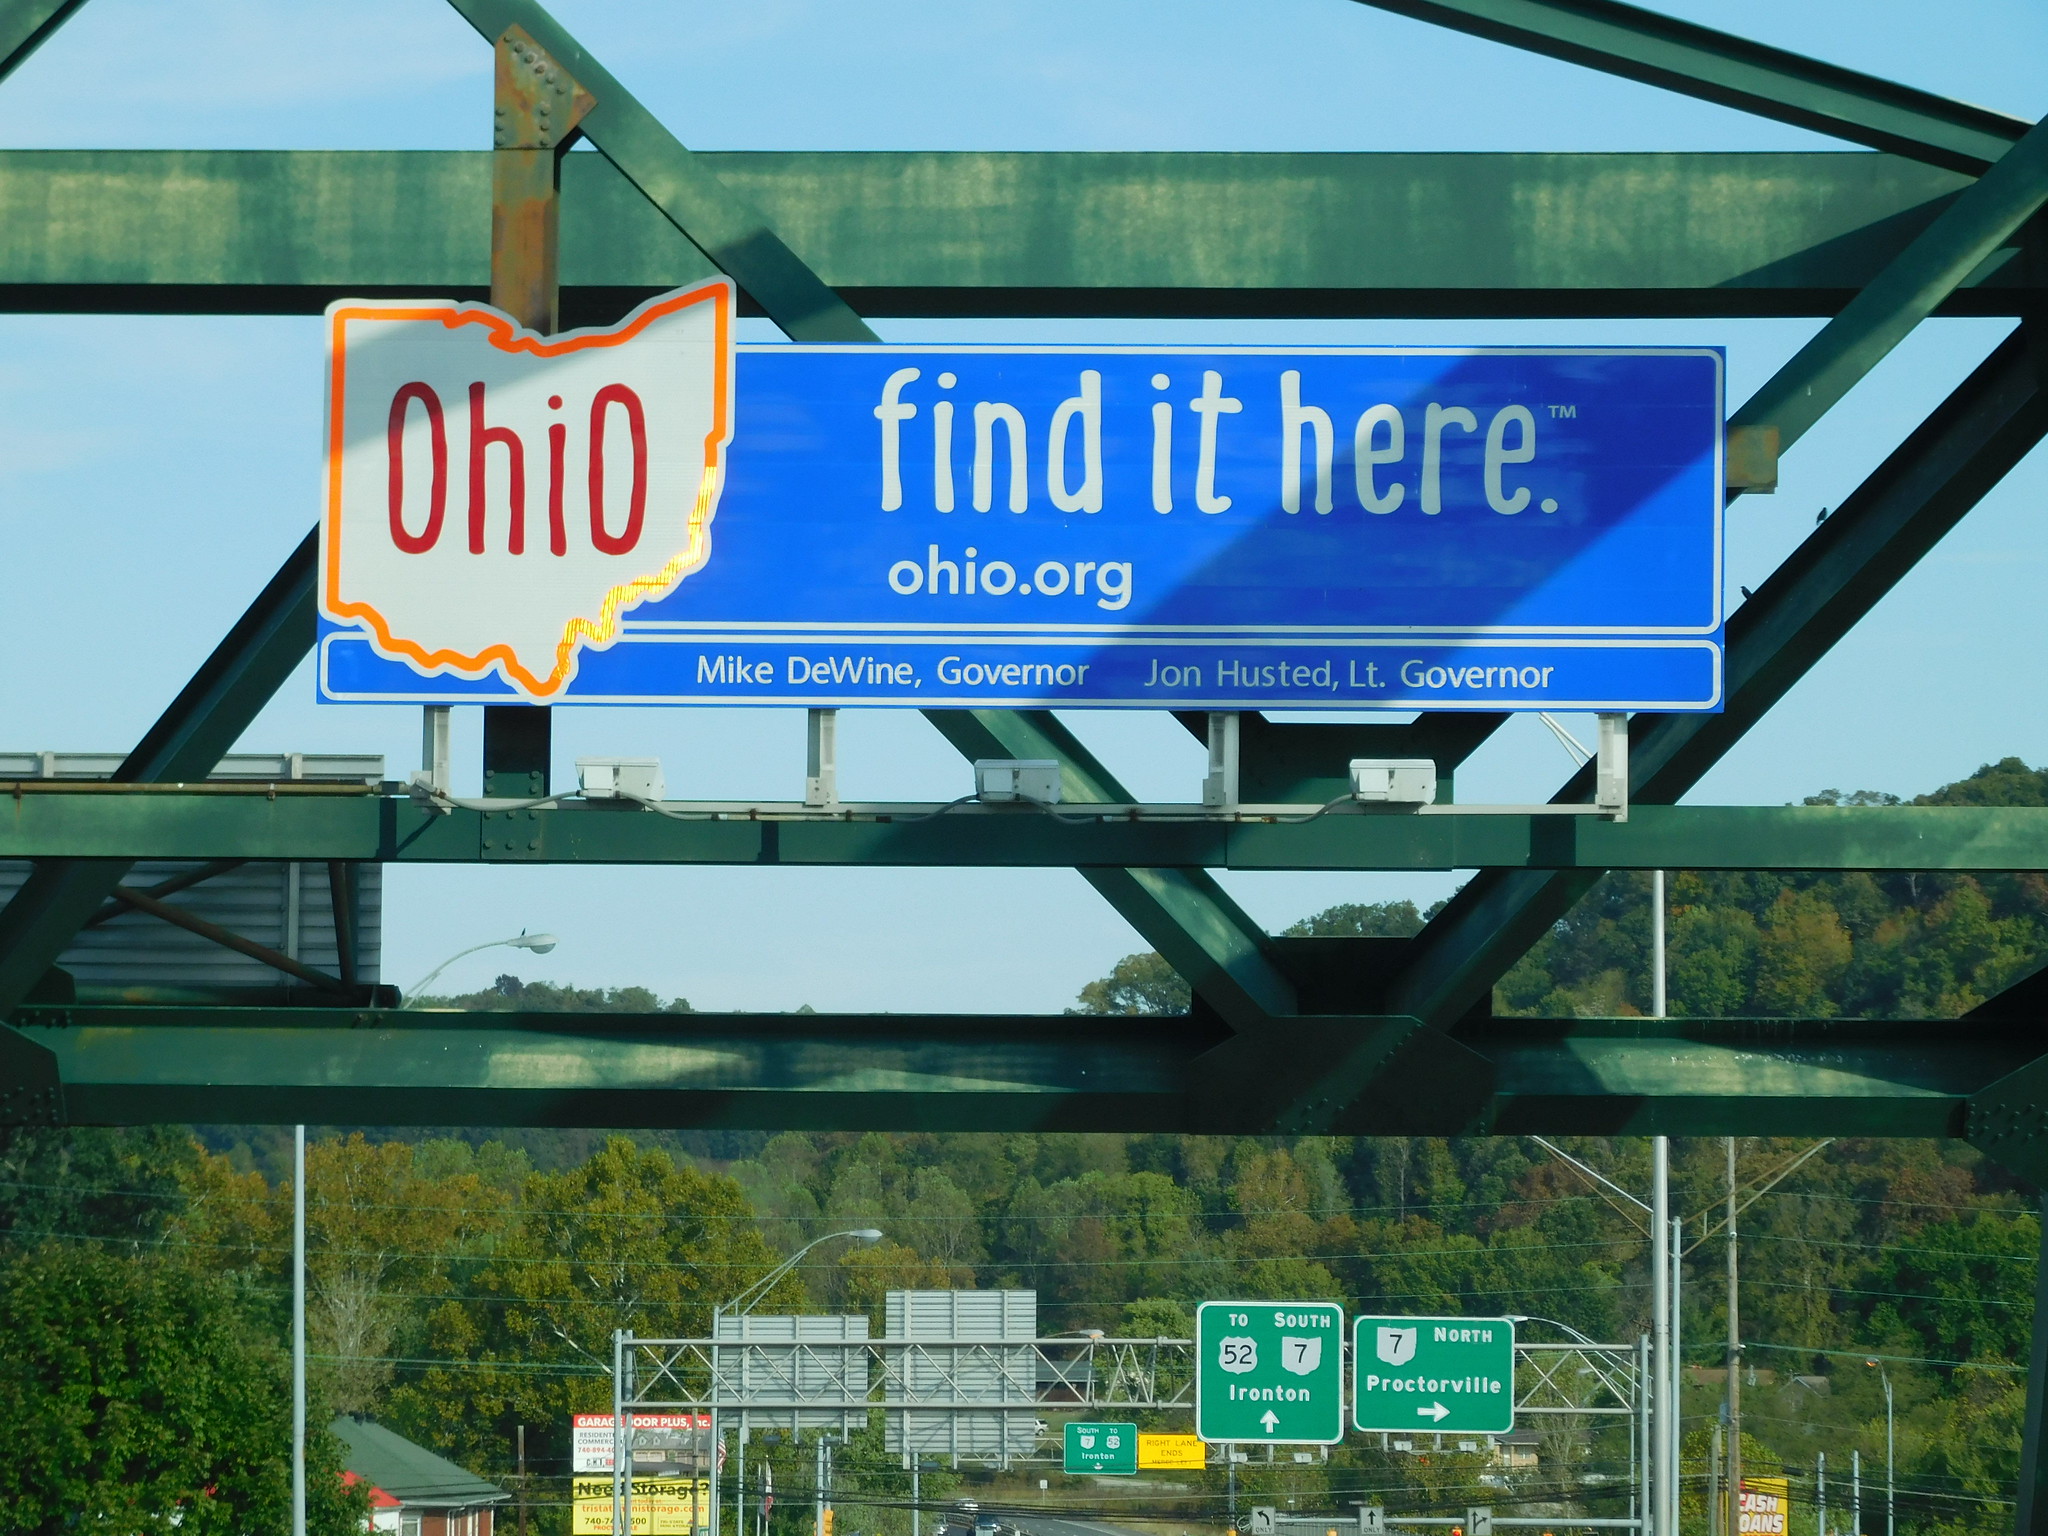 Bienvenue au signe de l'Ohio